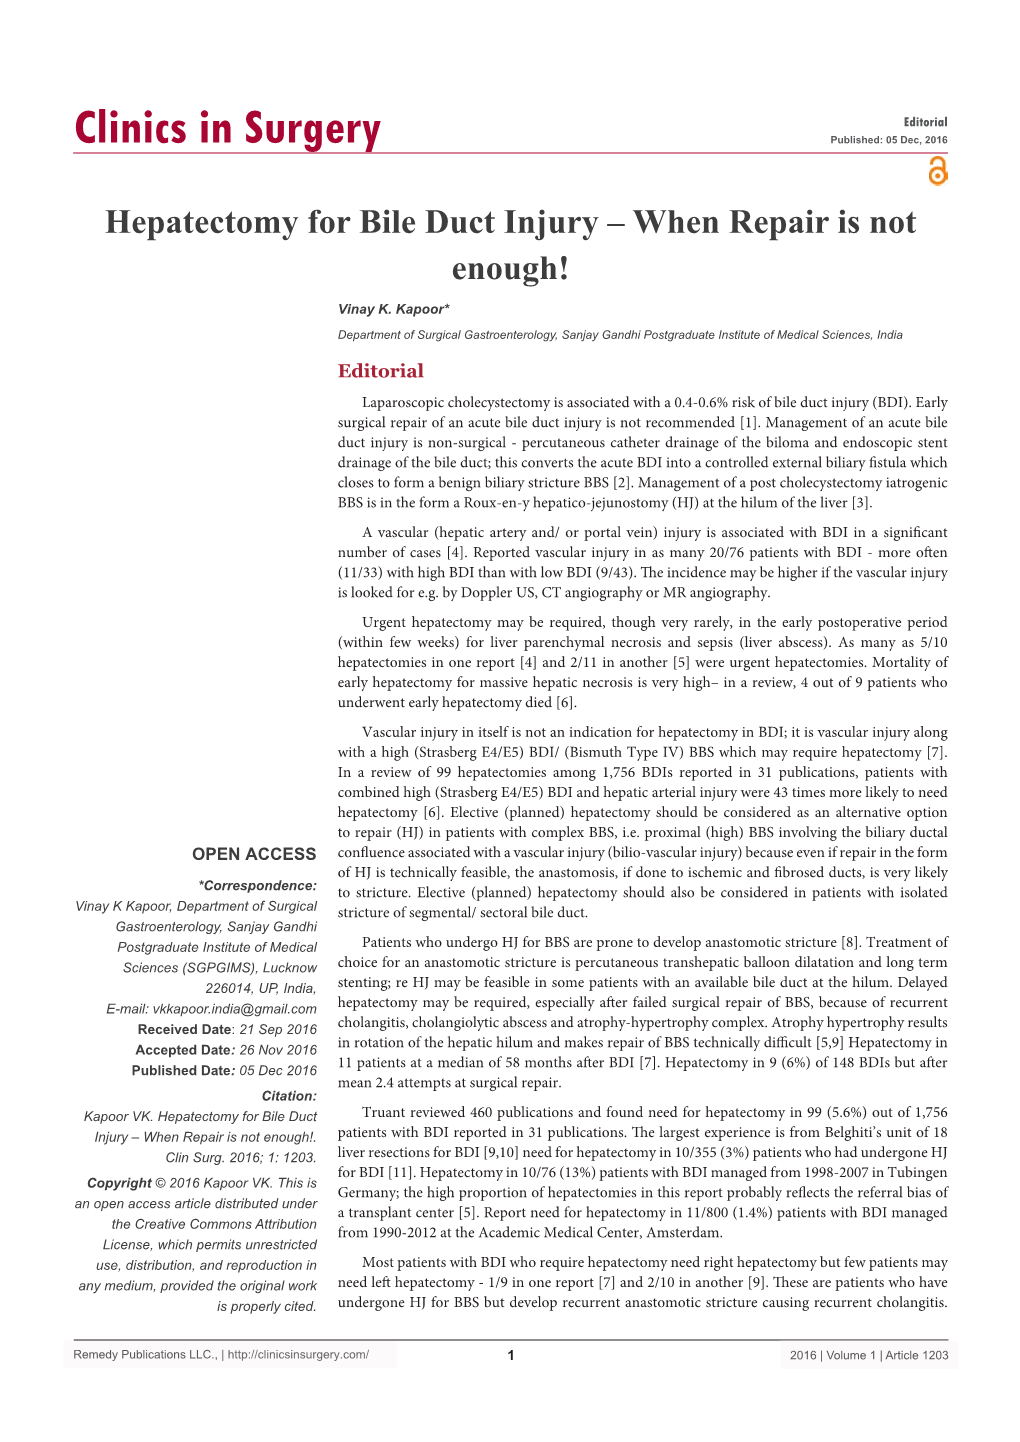 Hepatectomy for Bile Duct Injury – When Repair Is Not Enough!